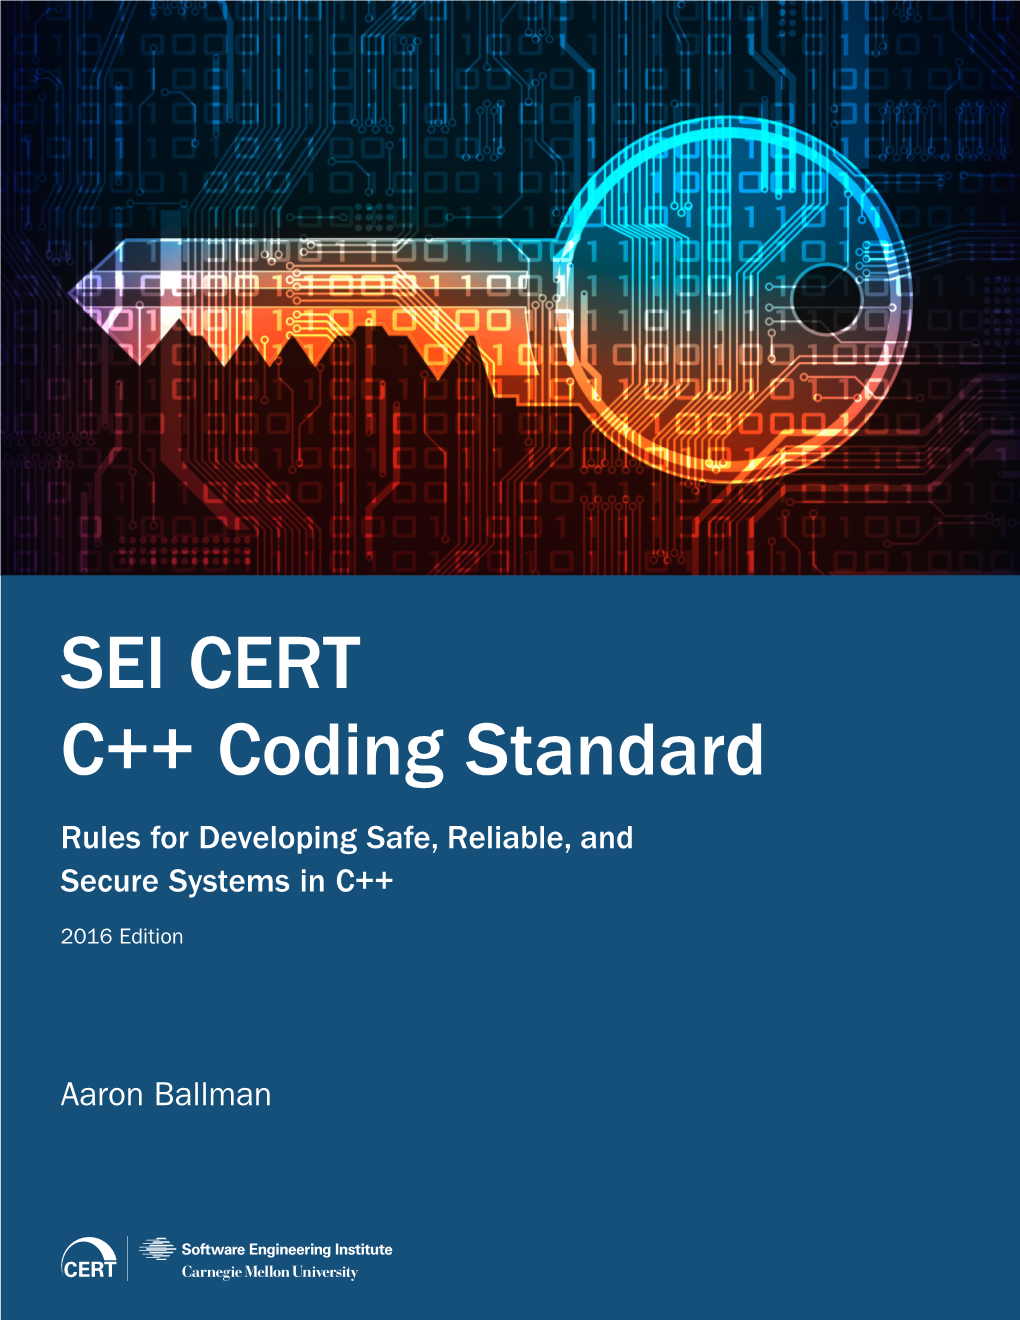 SEI CERT C++ Coding Standard (2016 Edition)